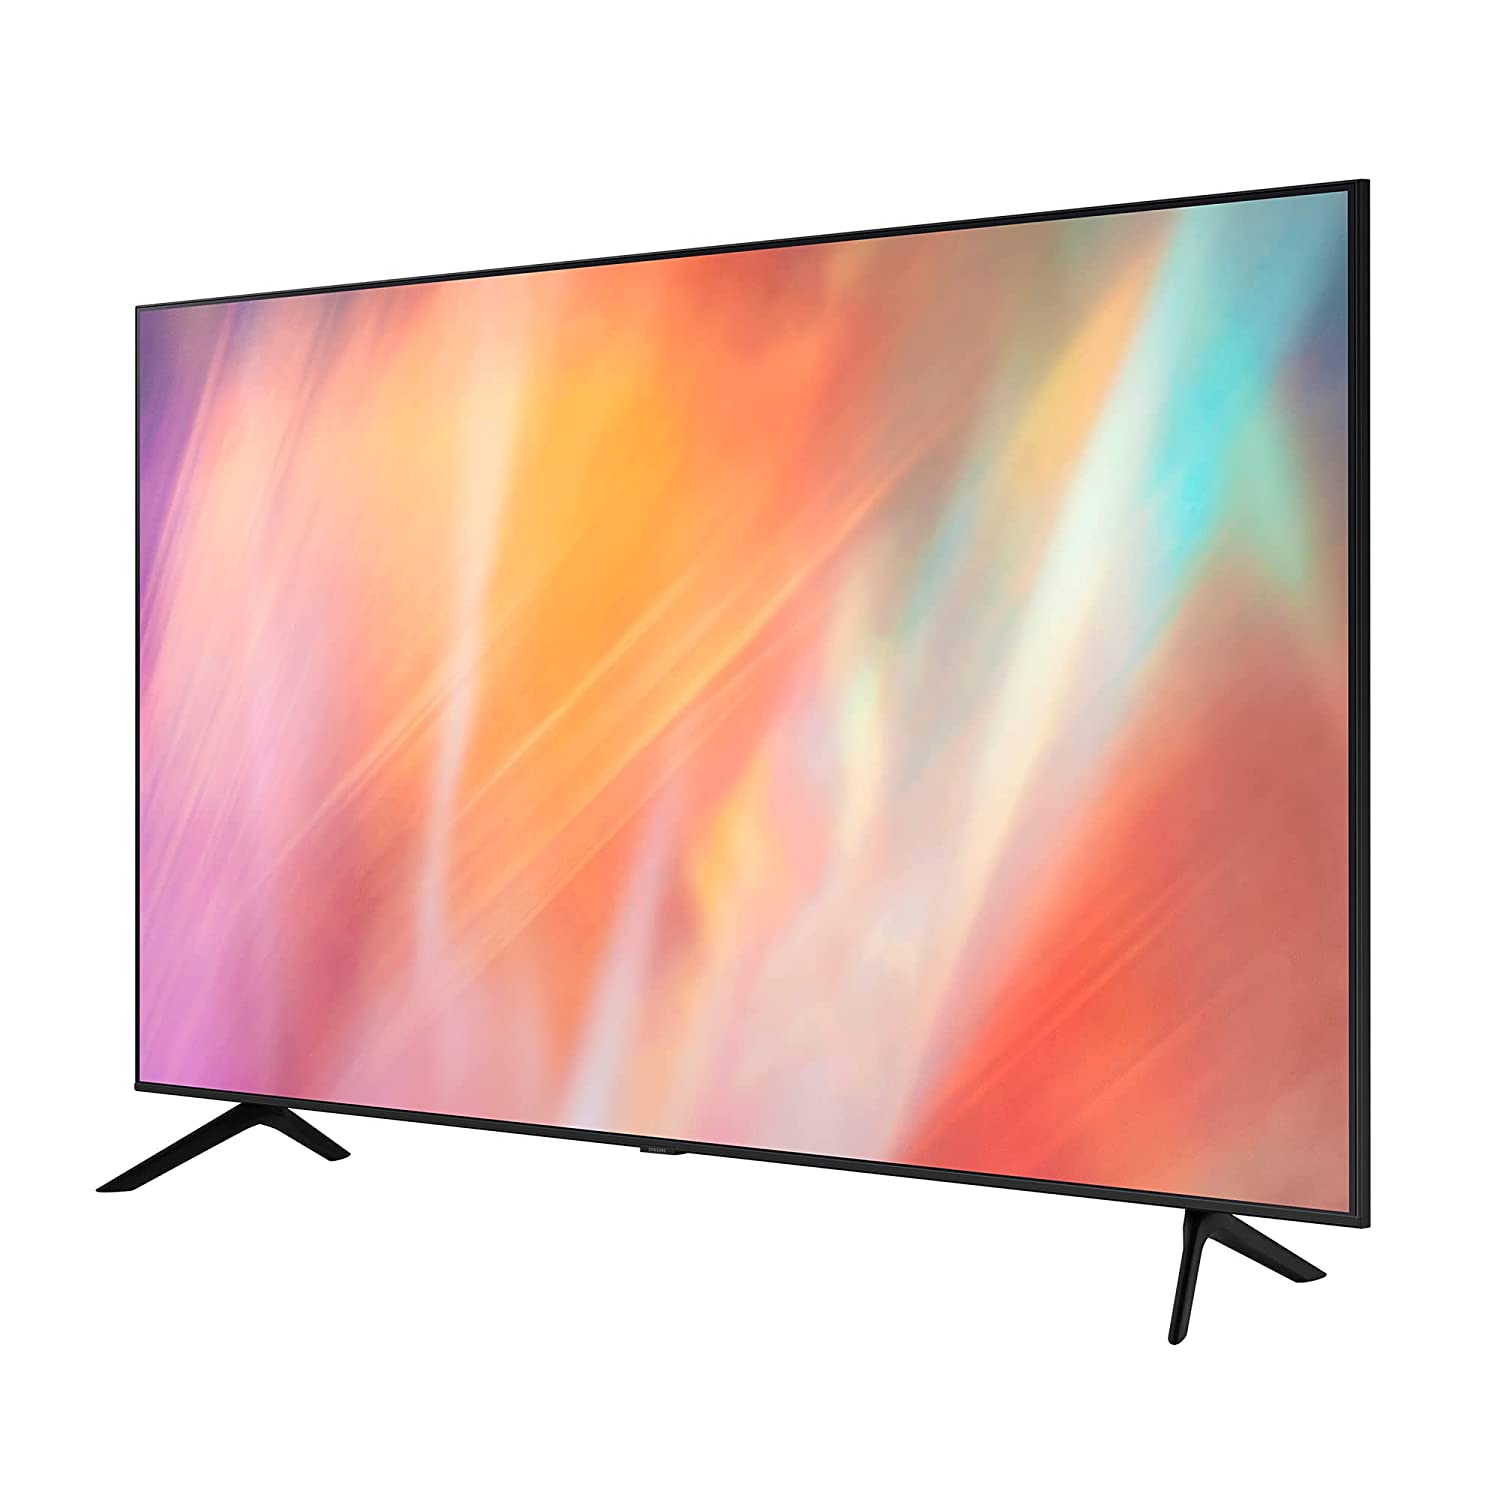 Samsung 108 cm (43 inches) Crystal 4K Pro Series Ultra HD Smart LED TV (Black)